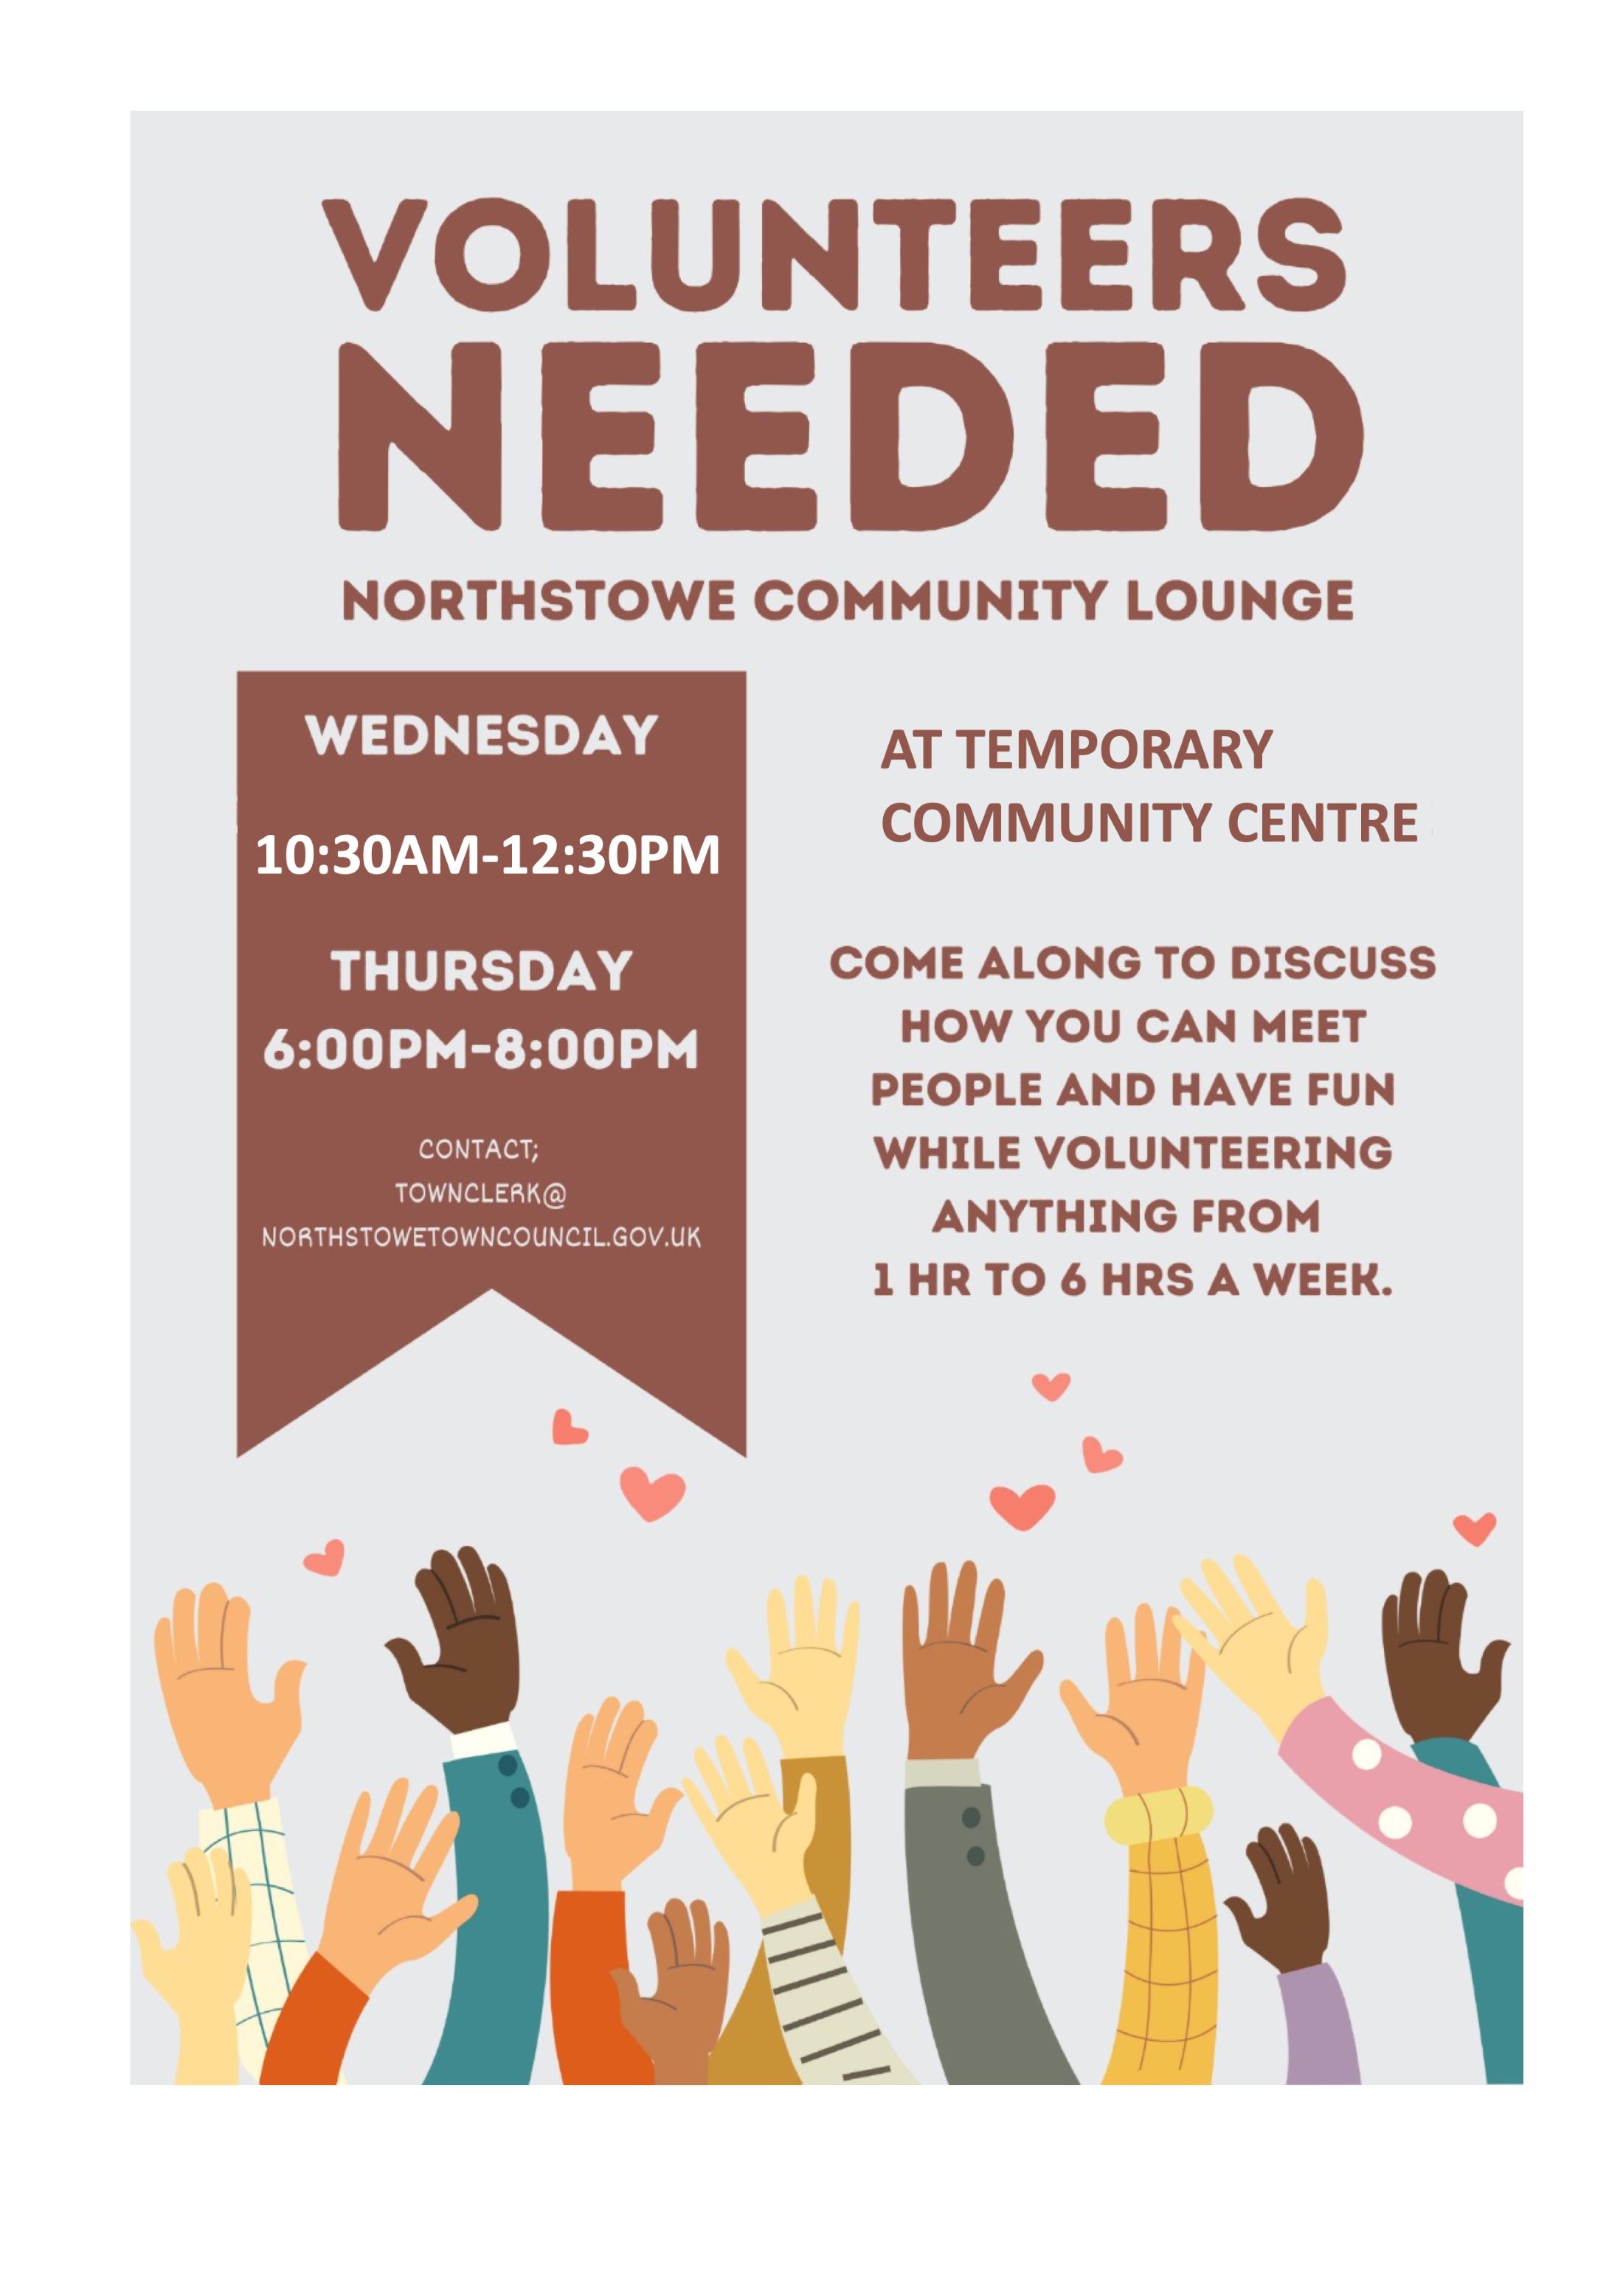 Community Lounge - Volunteers needed